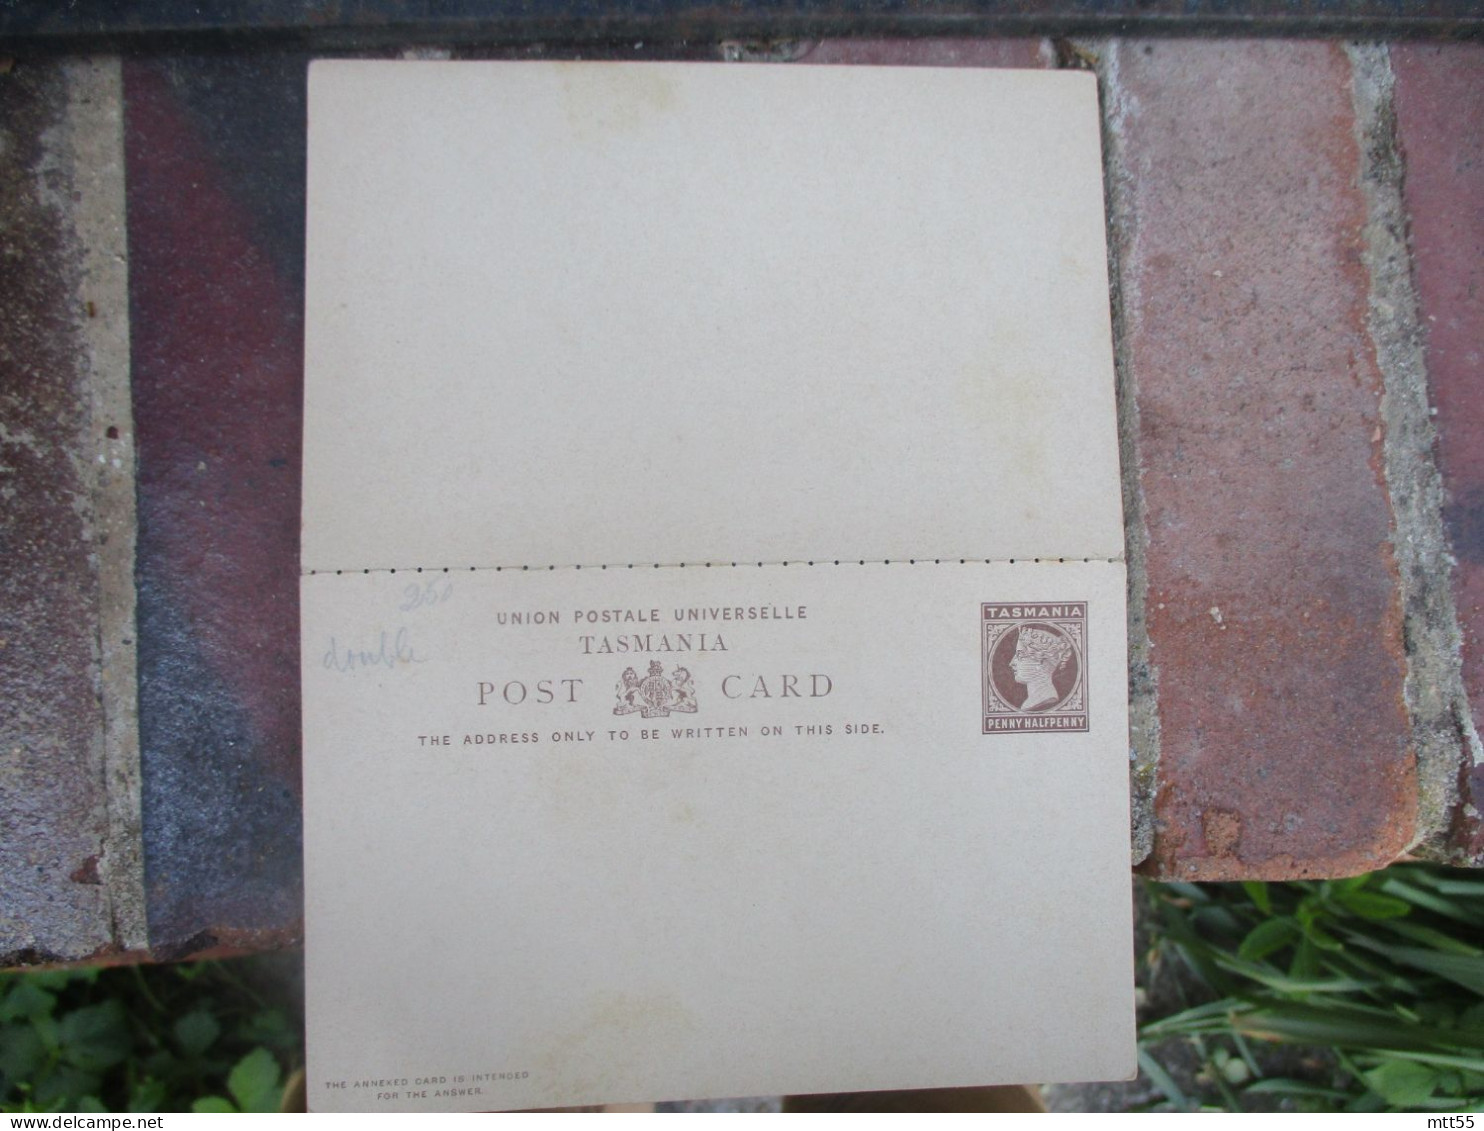 TASMANIA POST CARD DOUBLE CARTE REPONSE ENTIER POSTAL STATIONERY CARD - Sonstige - Ozeanien